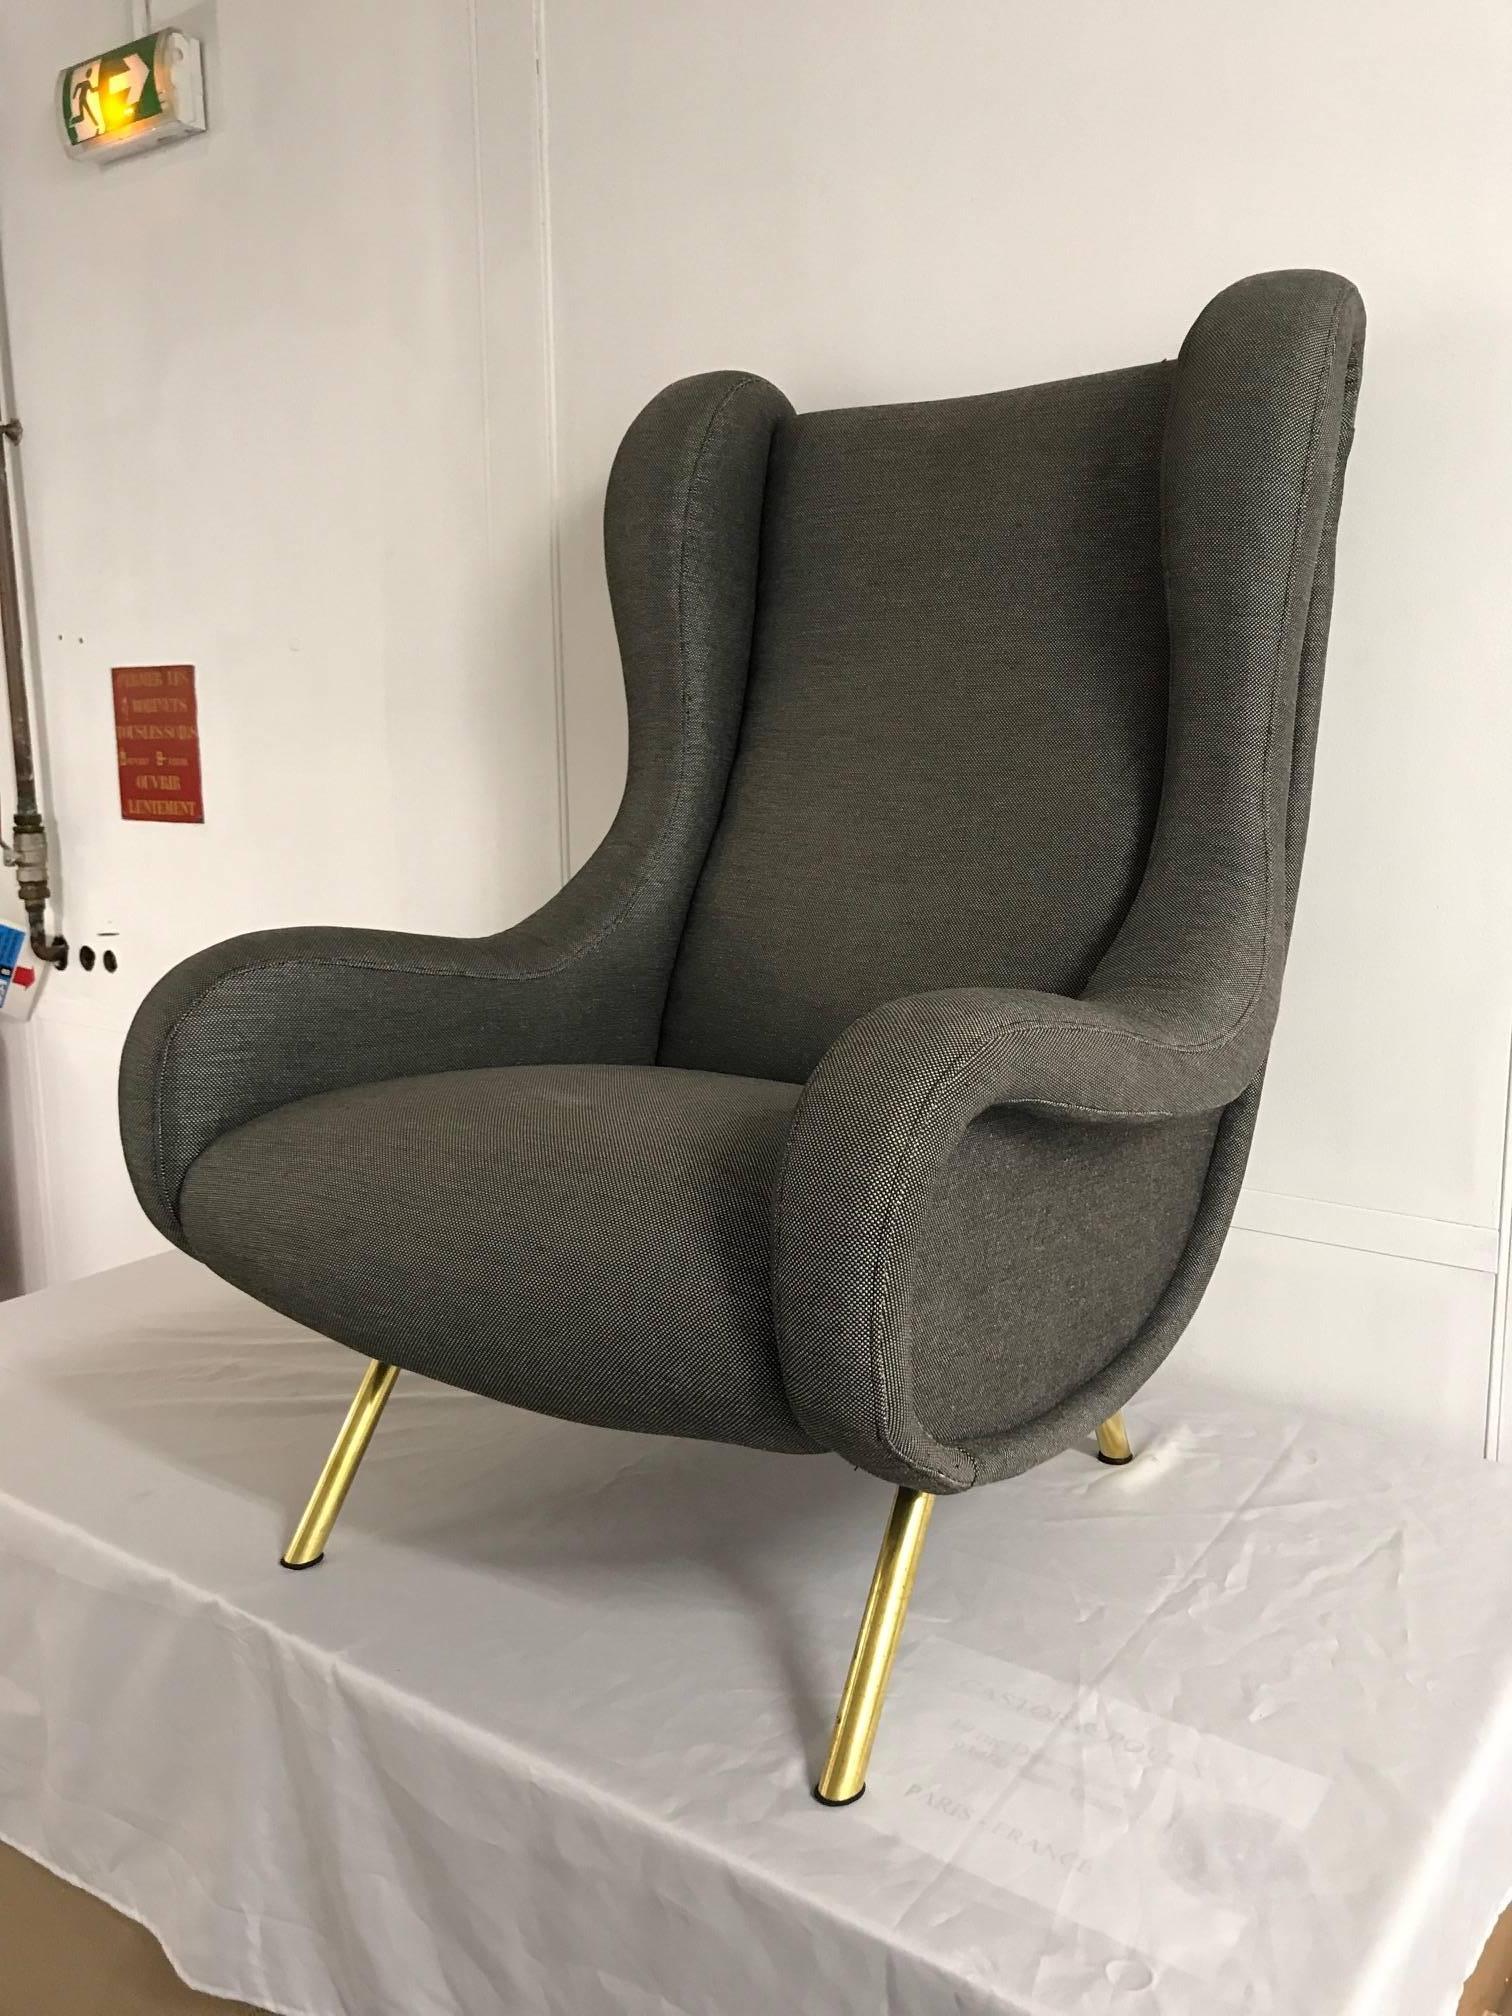 Senior armchair by Marco Zanuso for Arflex.